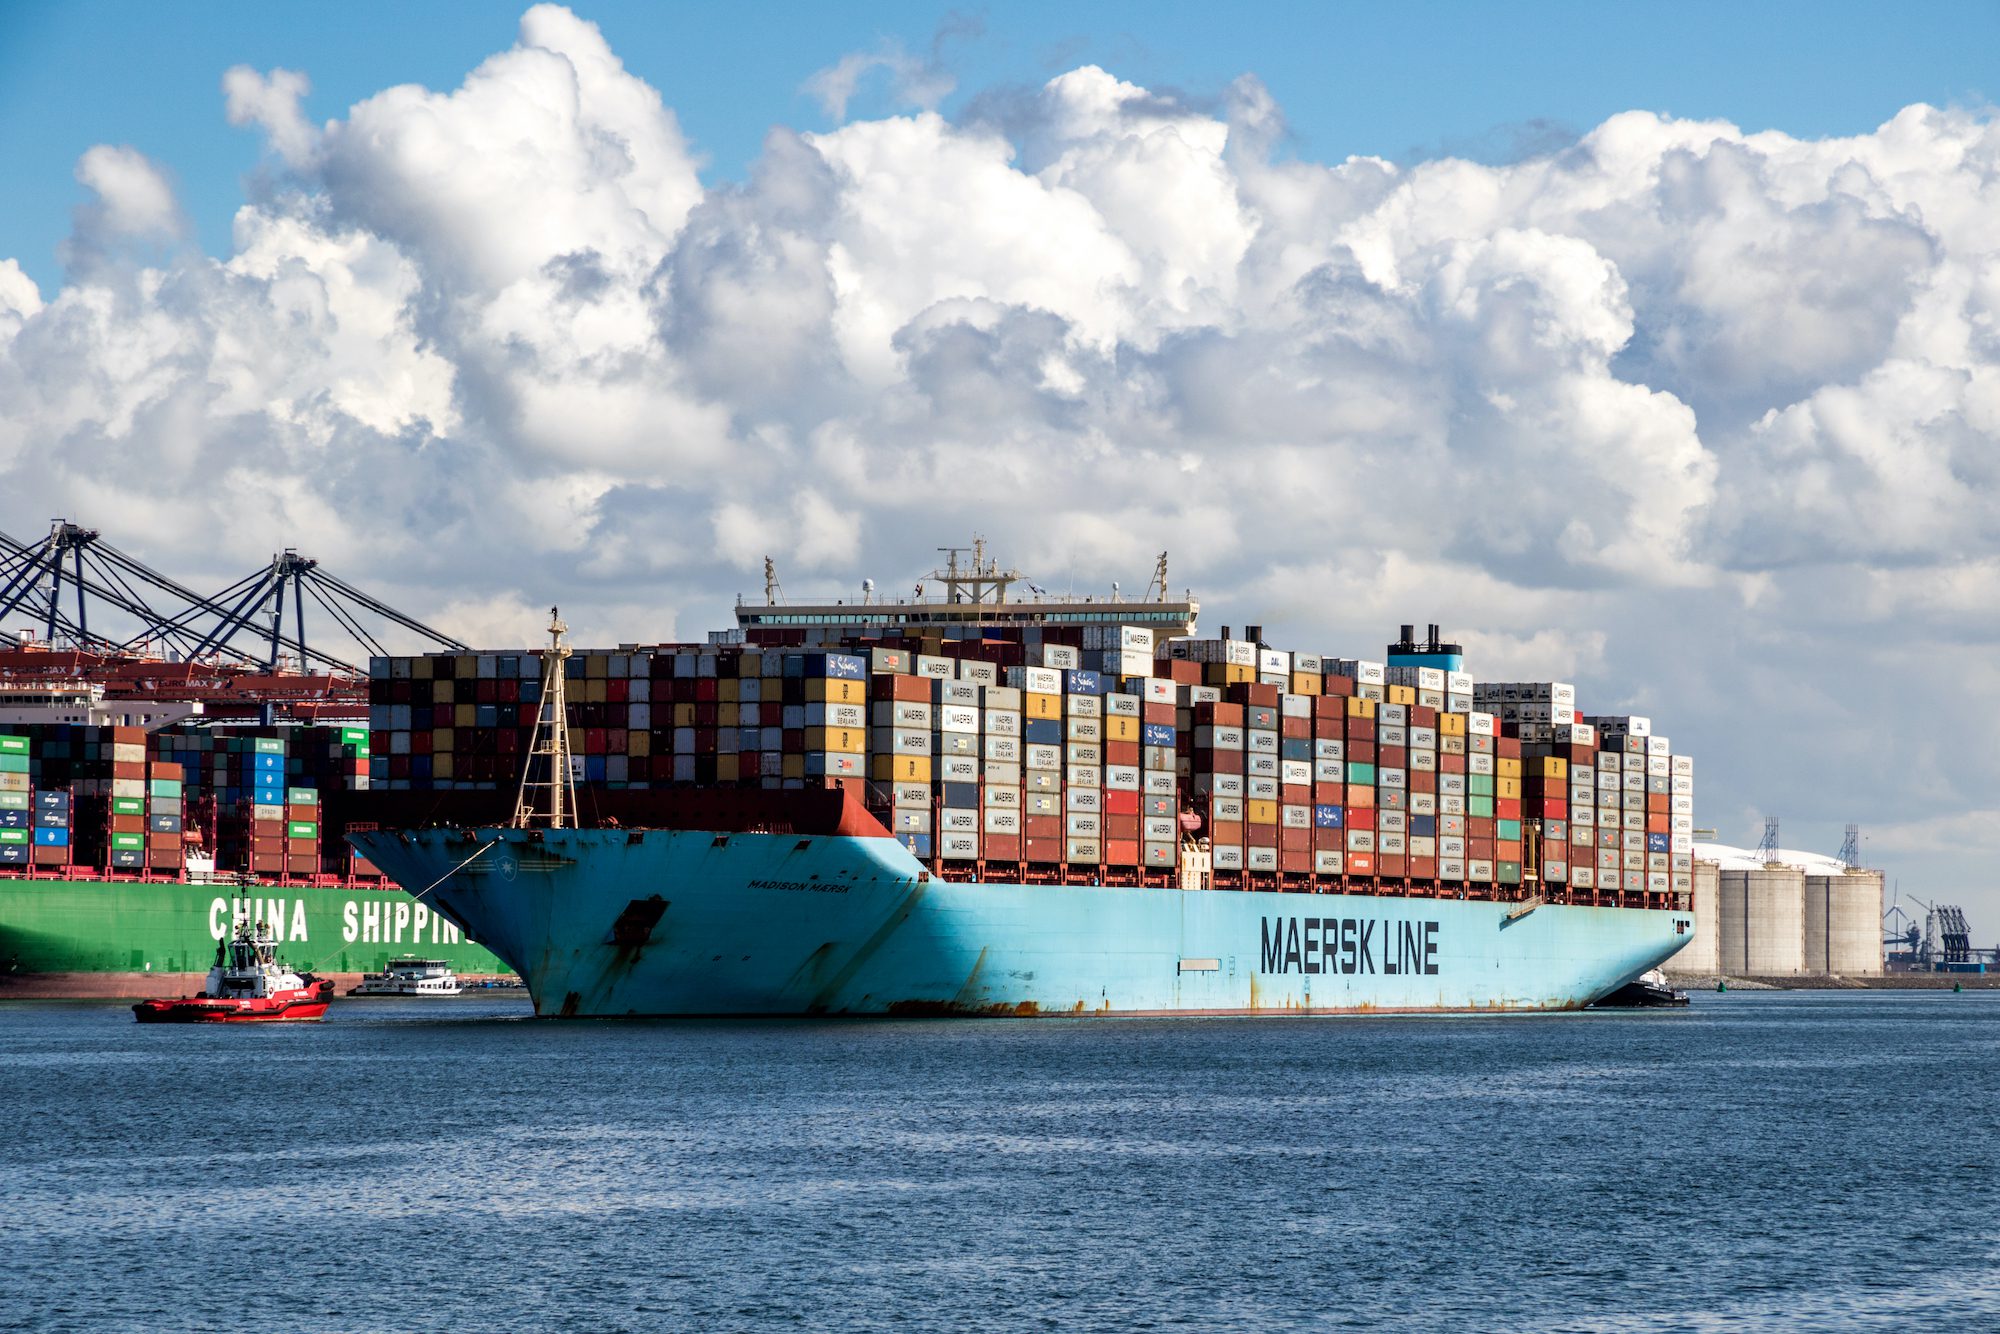 Maersk ship entering the Port of Rotterdam. Photo: Shutterstock